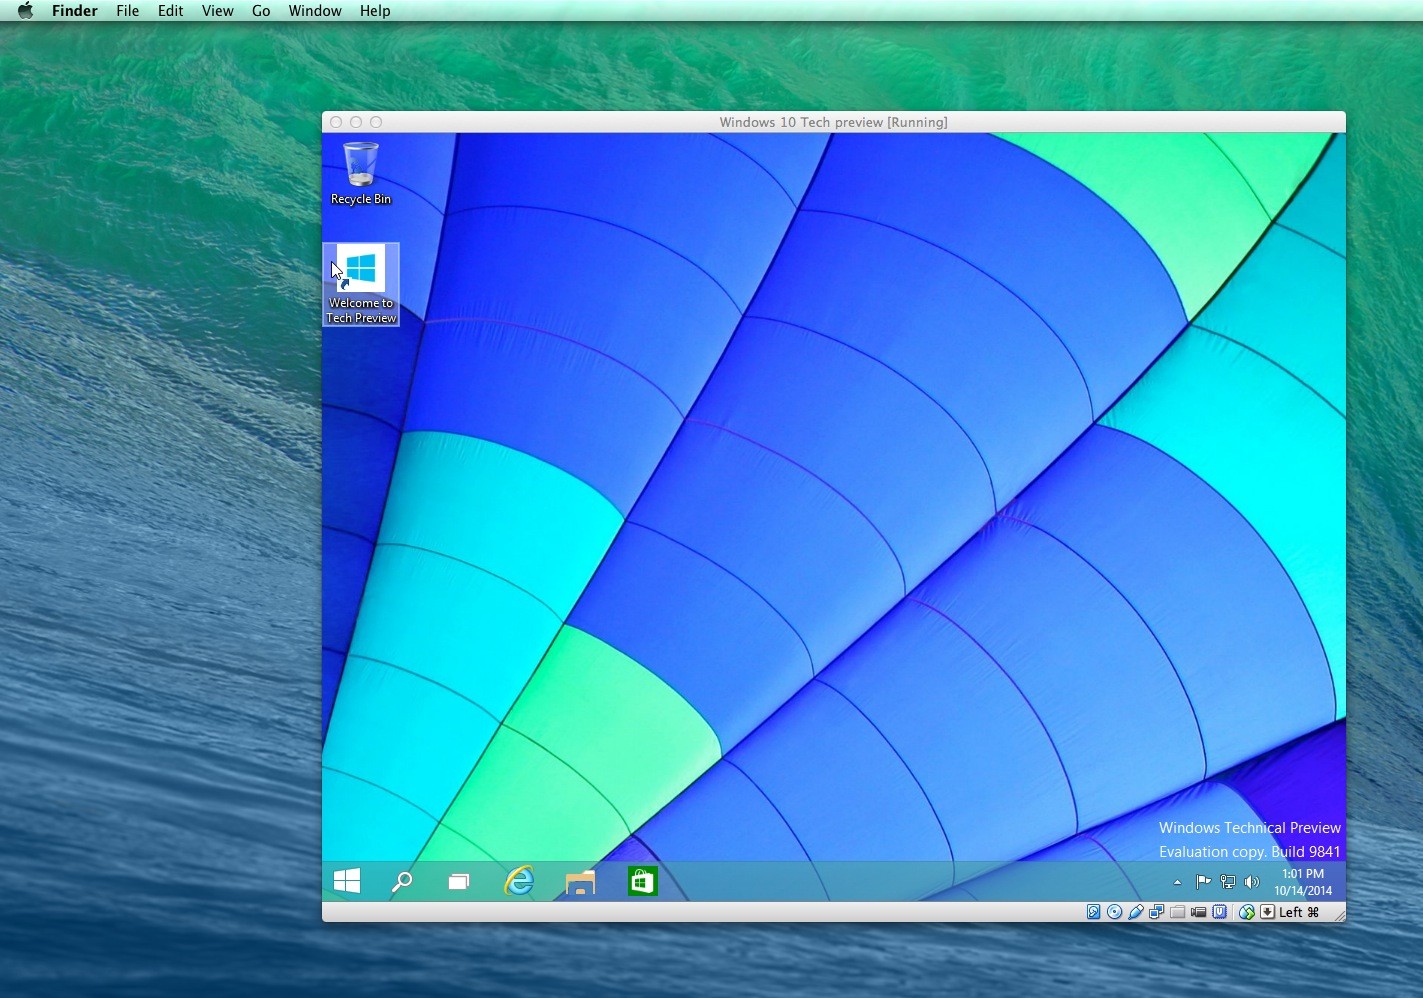 Install Windows 10 Using VirtualBox on Mac